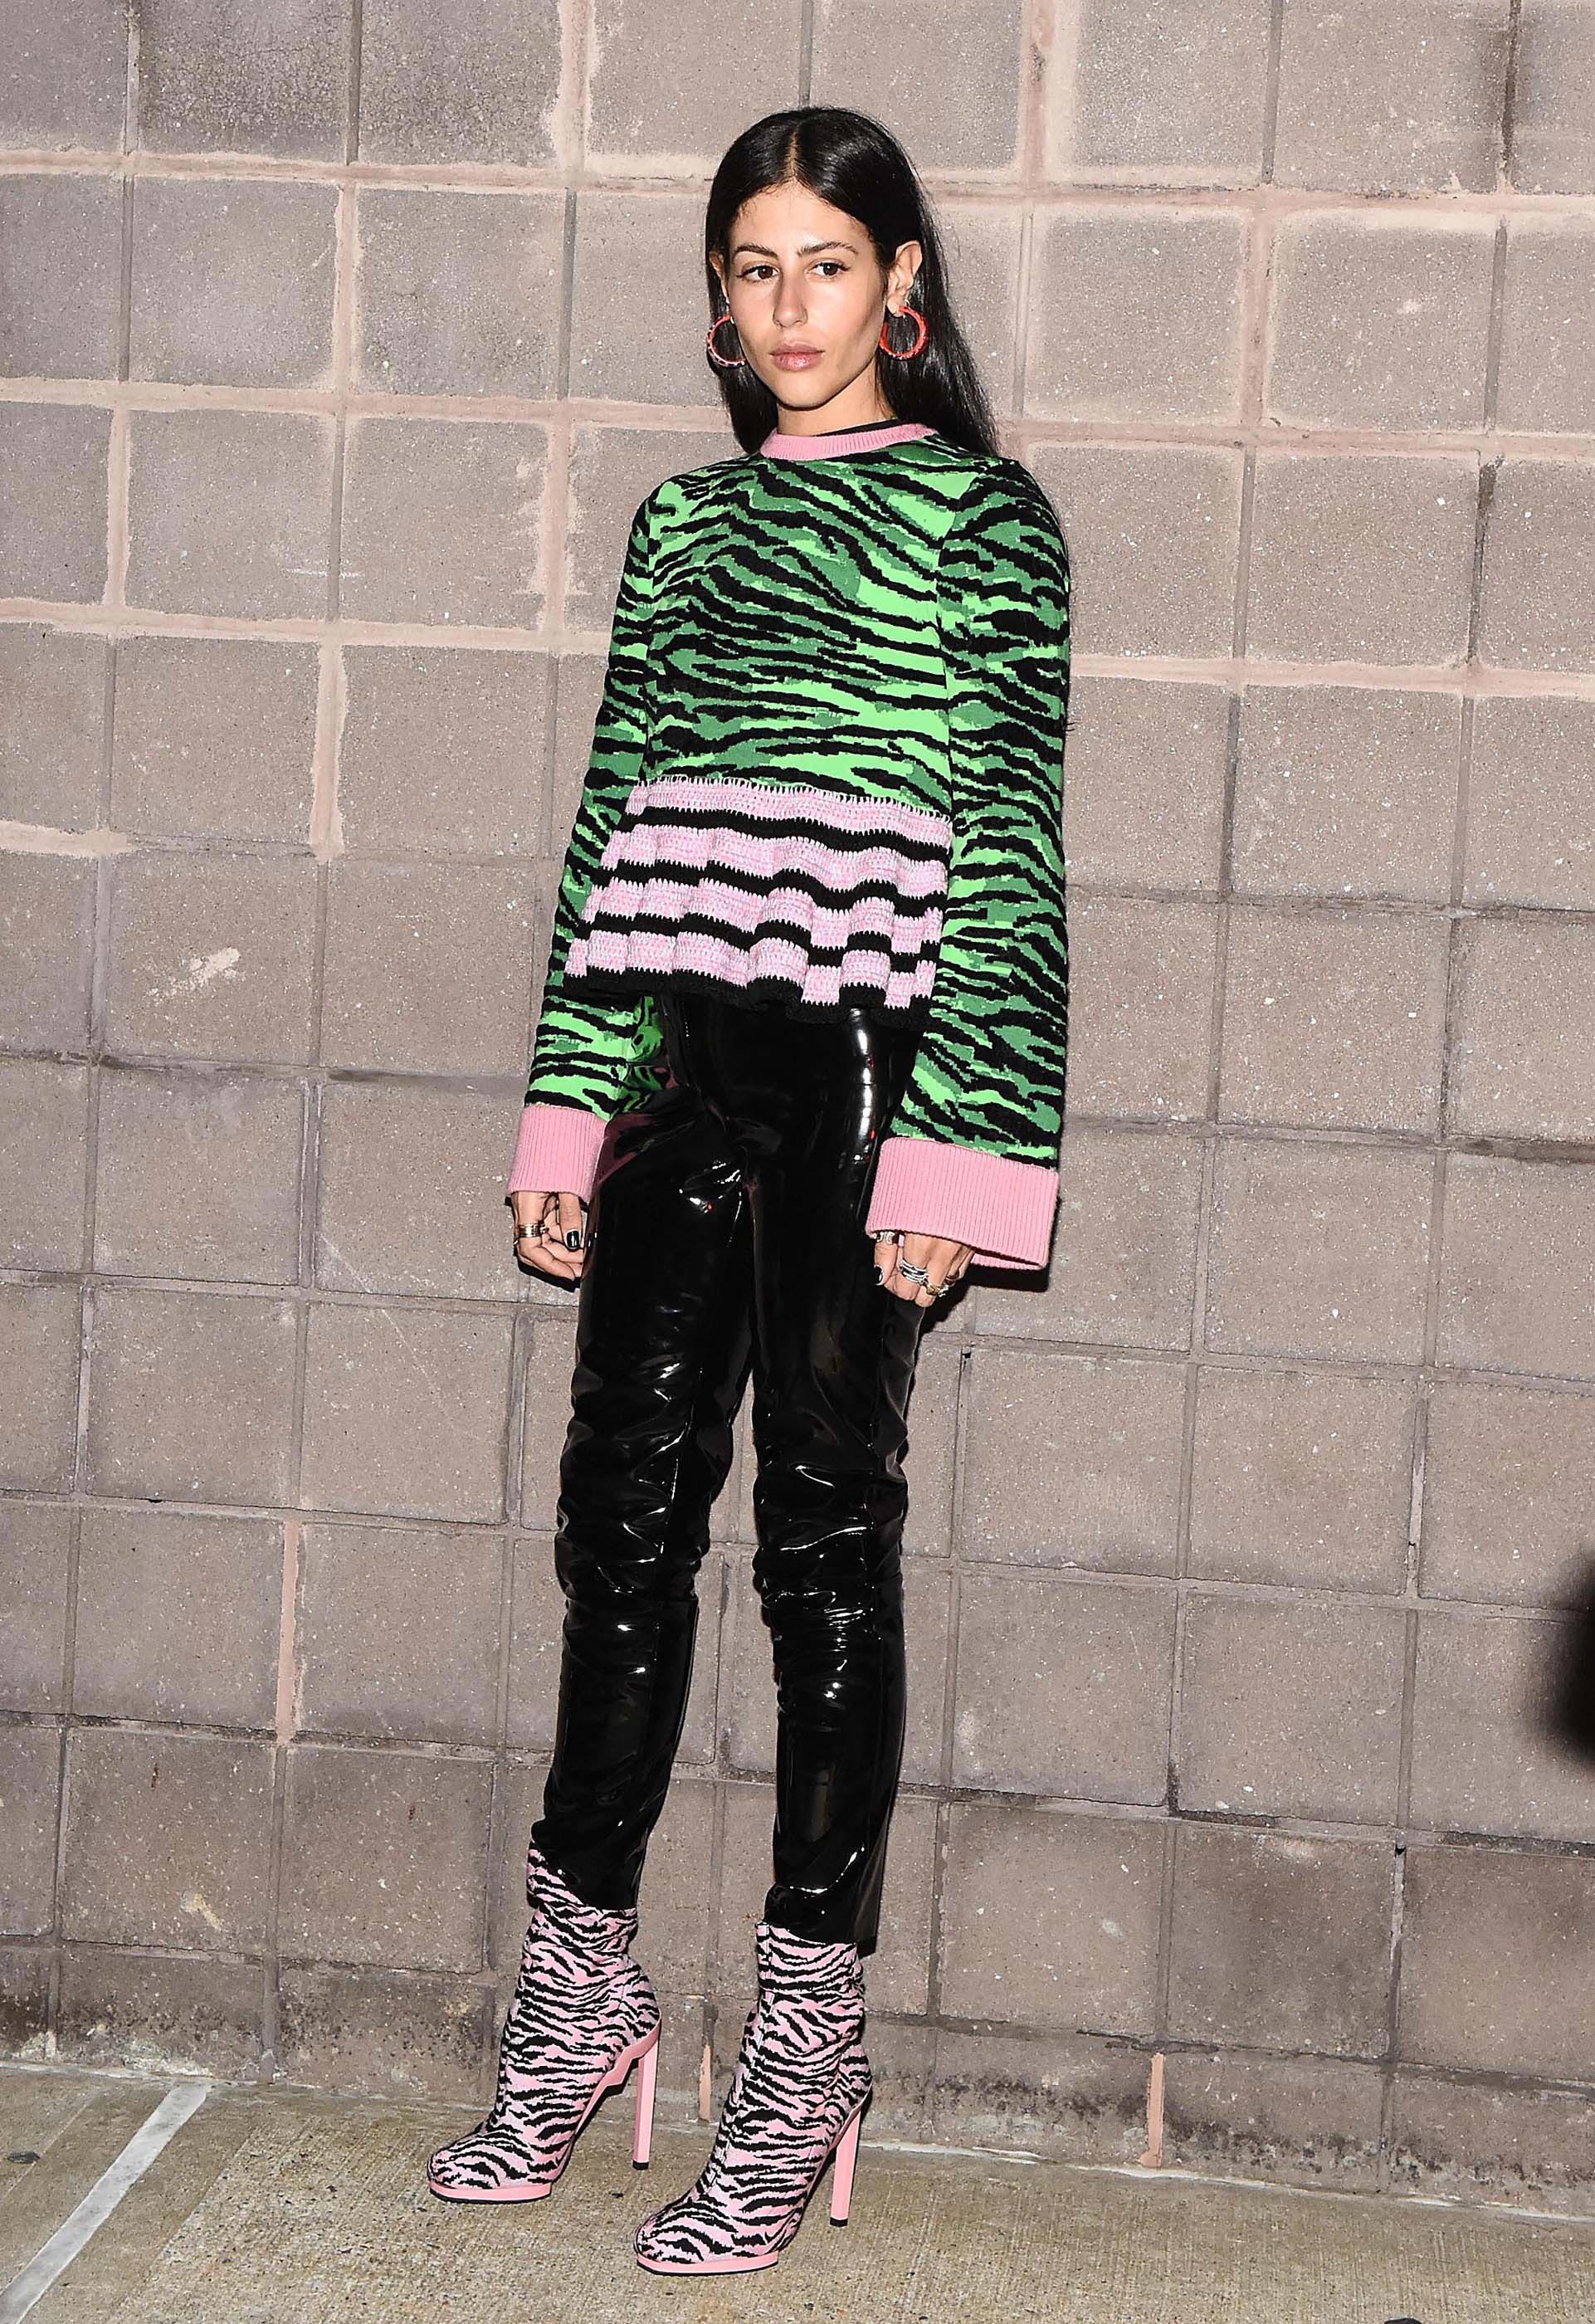 Gilda Ambrosio is seen outside the Kenzo x H&M fashion show